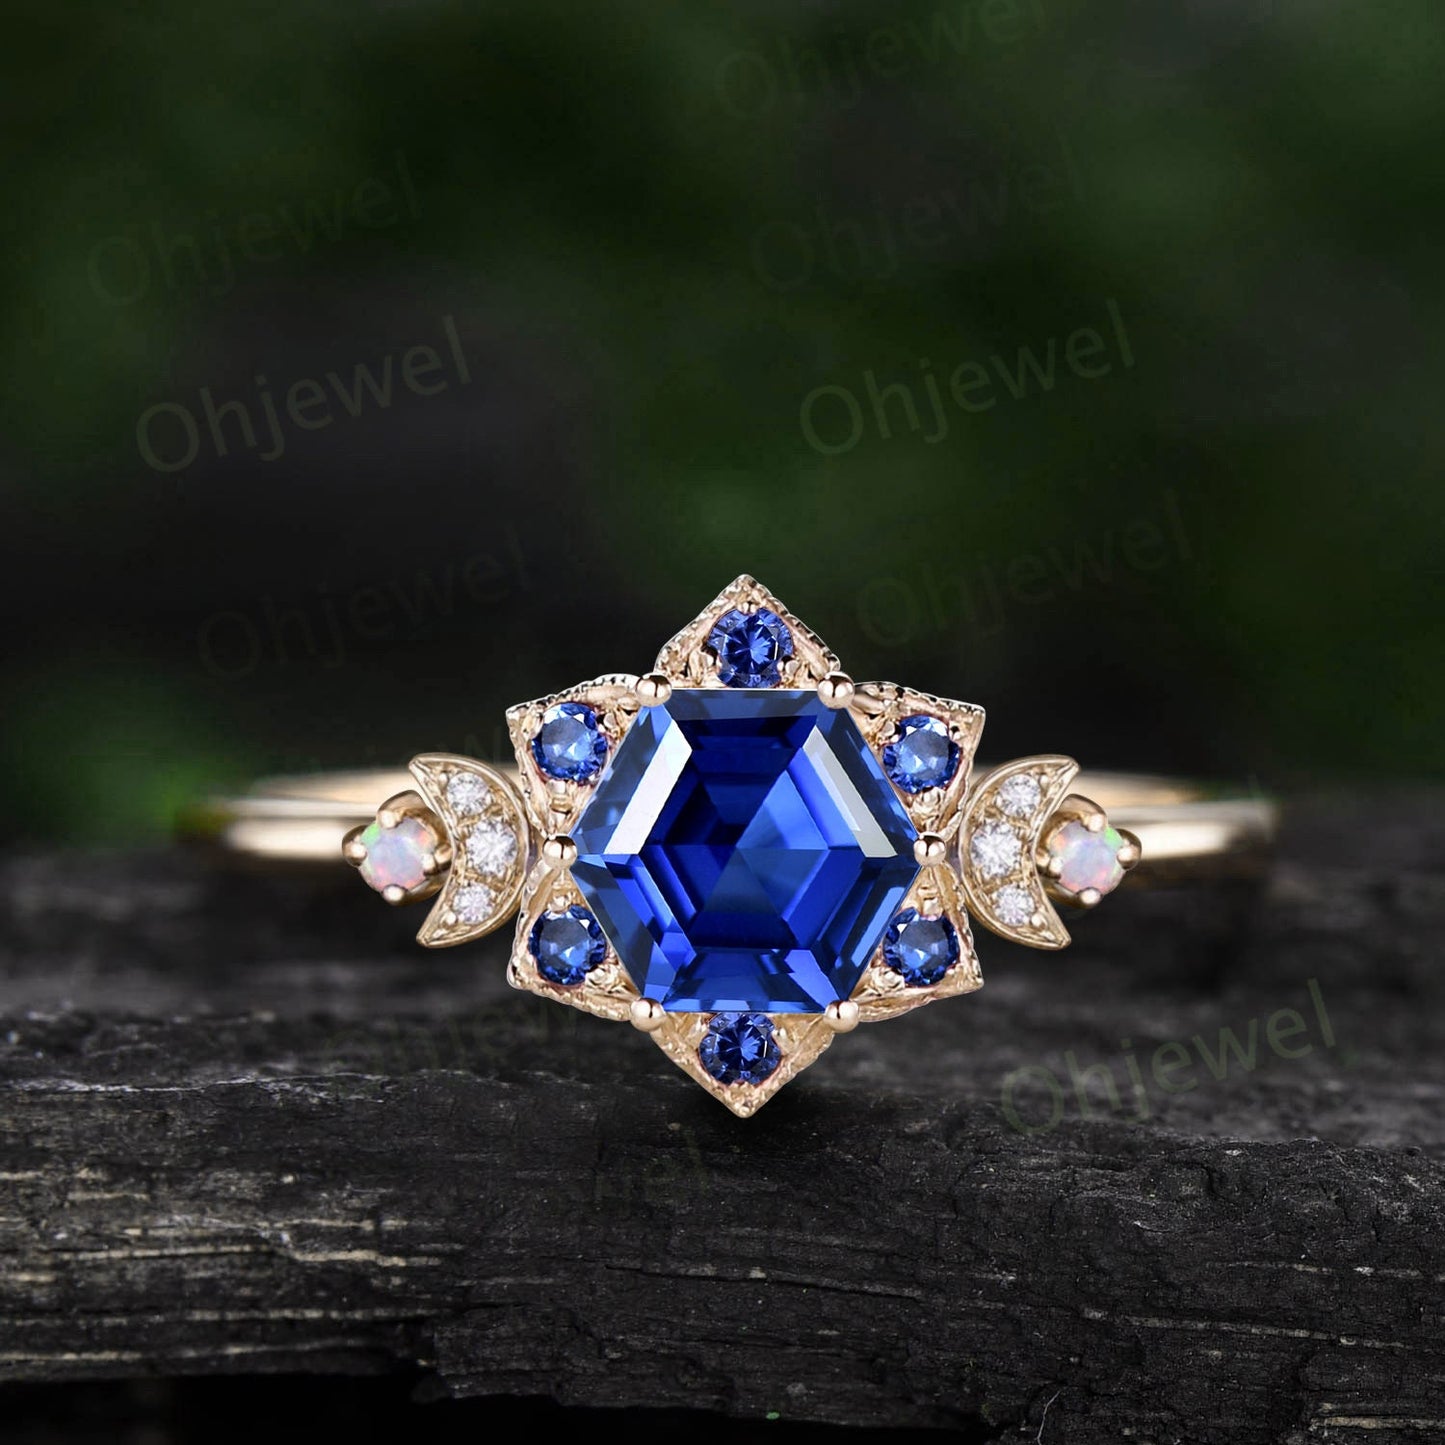 Vintage Hexagon blue sapphire engagement ring solid 14k yellow gold milgrain floral moon opal diamond ring women gemstone wedding ring gift